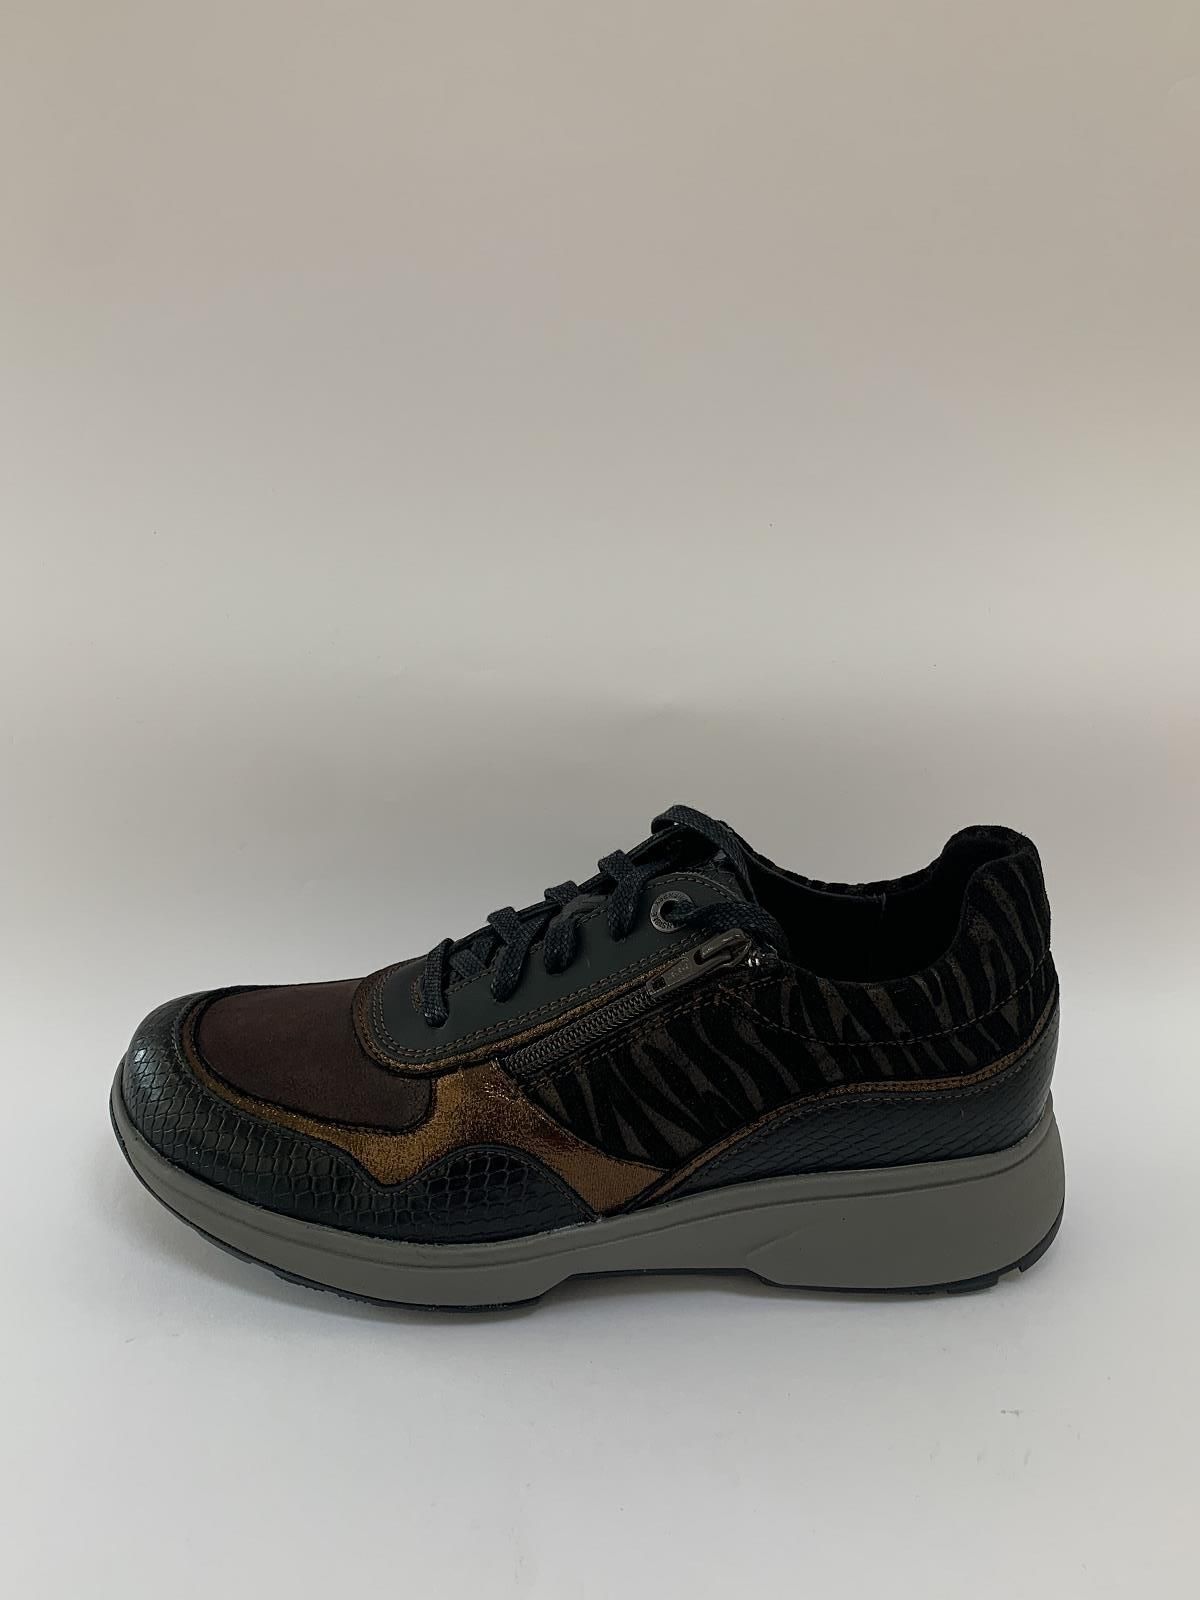 Xsensible Sneaker Zwart+kleur dames (StretchRunner Tijger - Lima) - Schoenen Luca